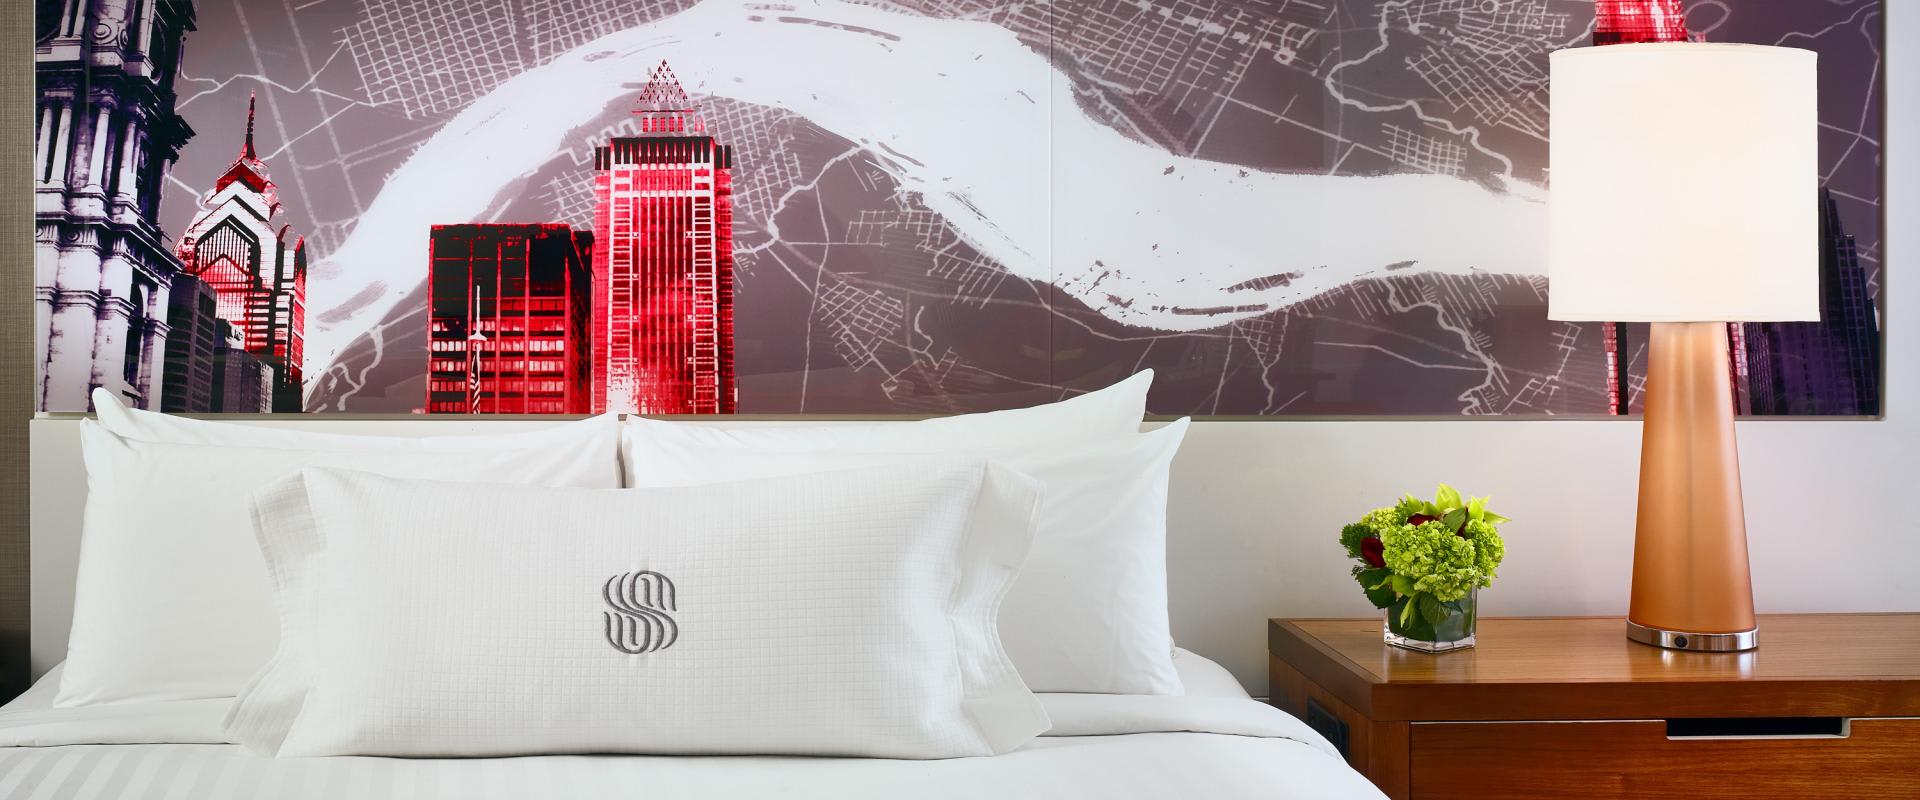 Philadelphia Hotel Bed With Modern Artwork